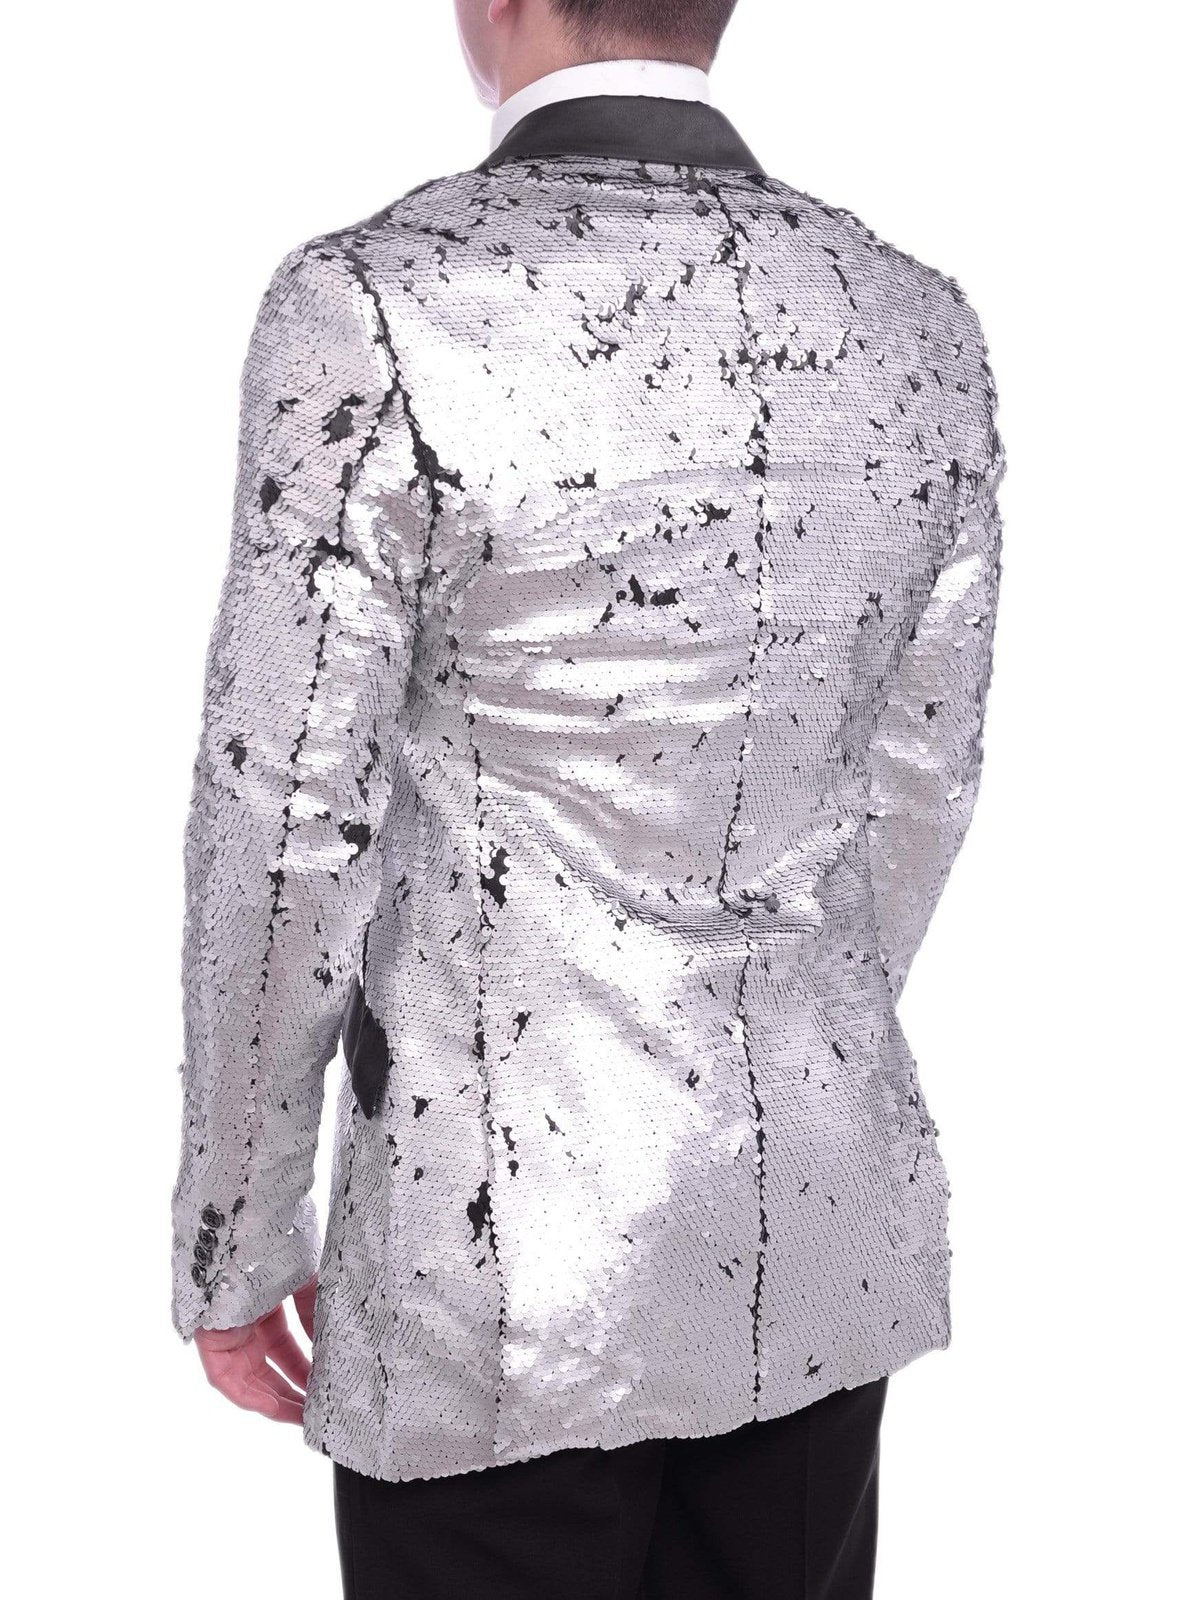 Barabas BLAZERS Barabas Extra Slim Black Silver Sequin Blazer Sportcoat With Satin Peak Lapels